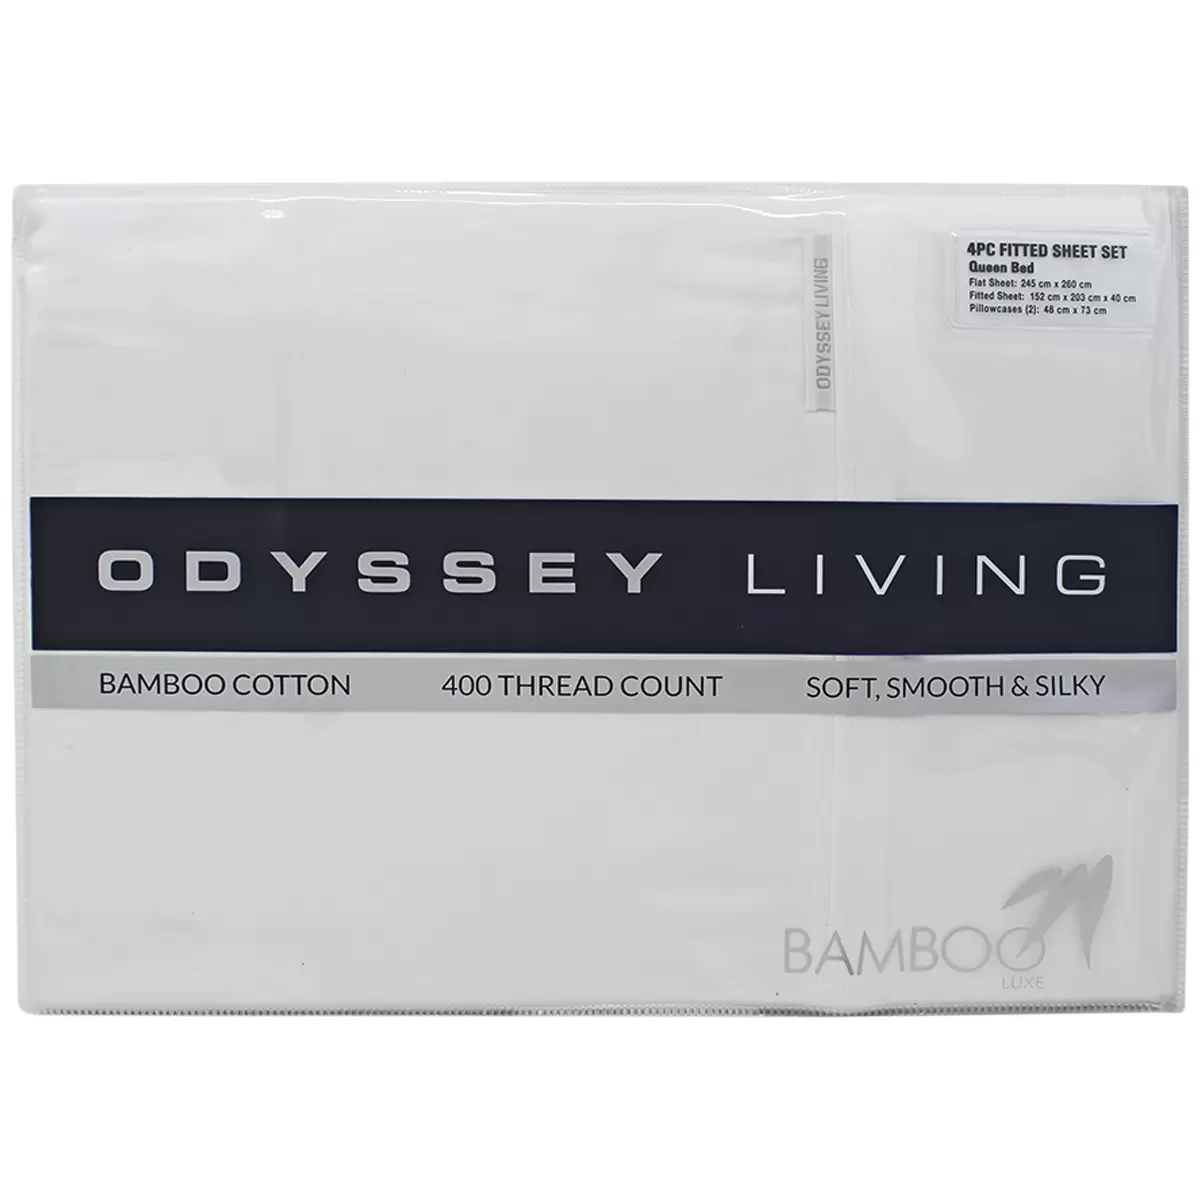 Odyssey Living 400 Thread Count Bamboo 4 Piece Sheet Set Queen